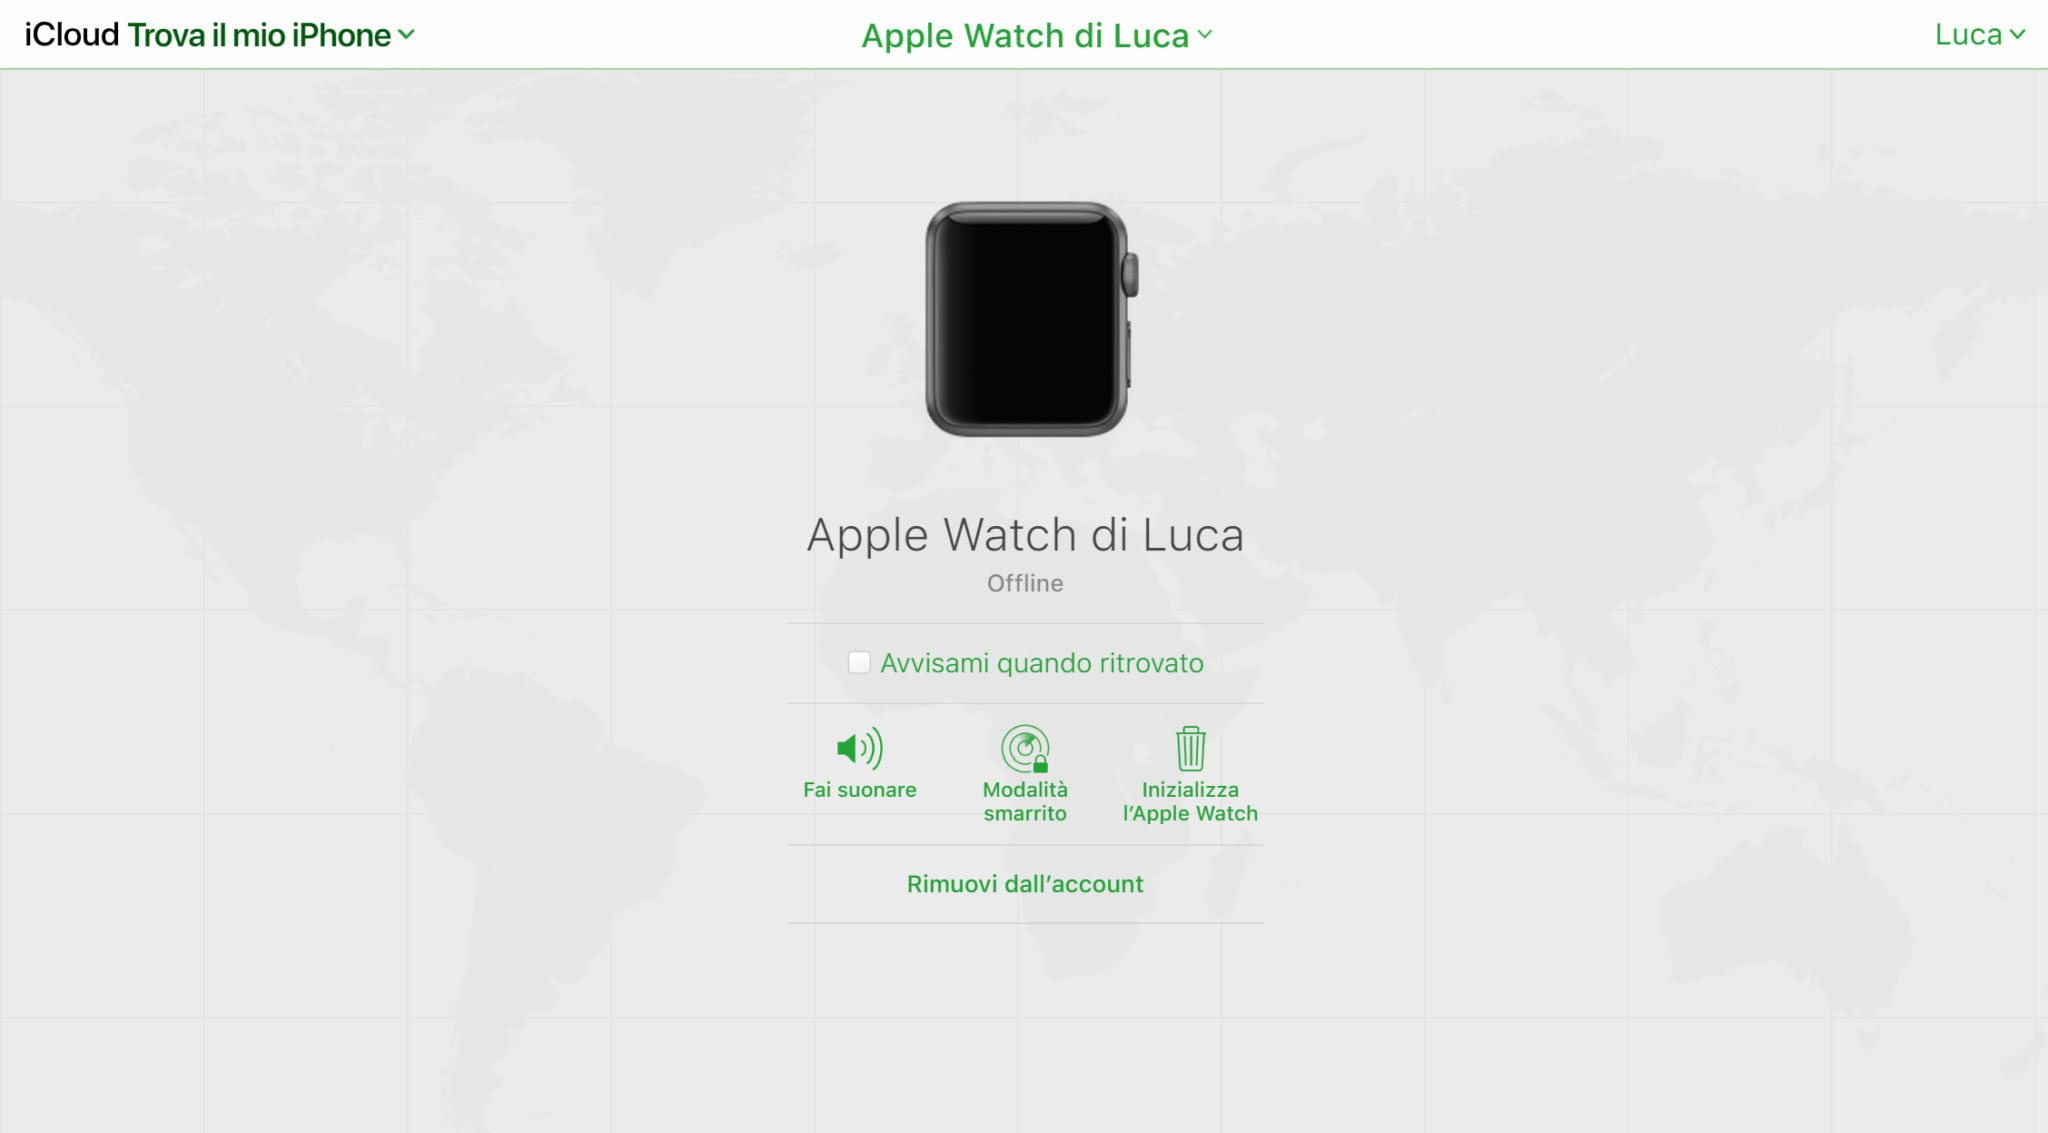 Найти айфон через часы. Apple watch ICLOUD. Найти устройство на Apple watch. Найти айфон на вотч. Как найти айфон через часы.